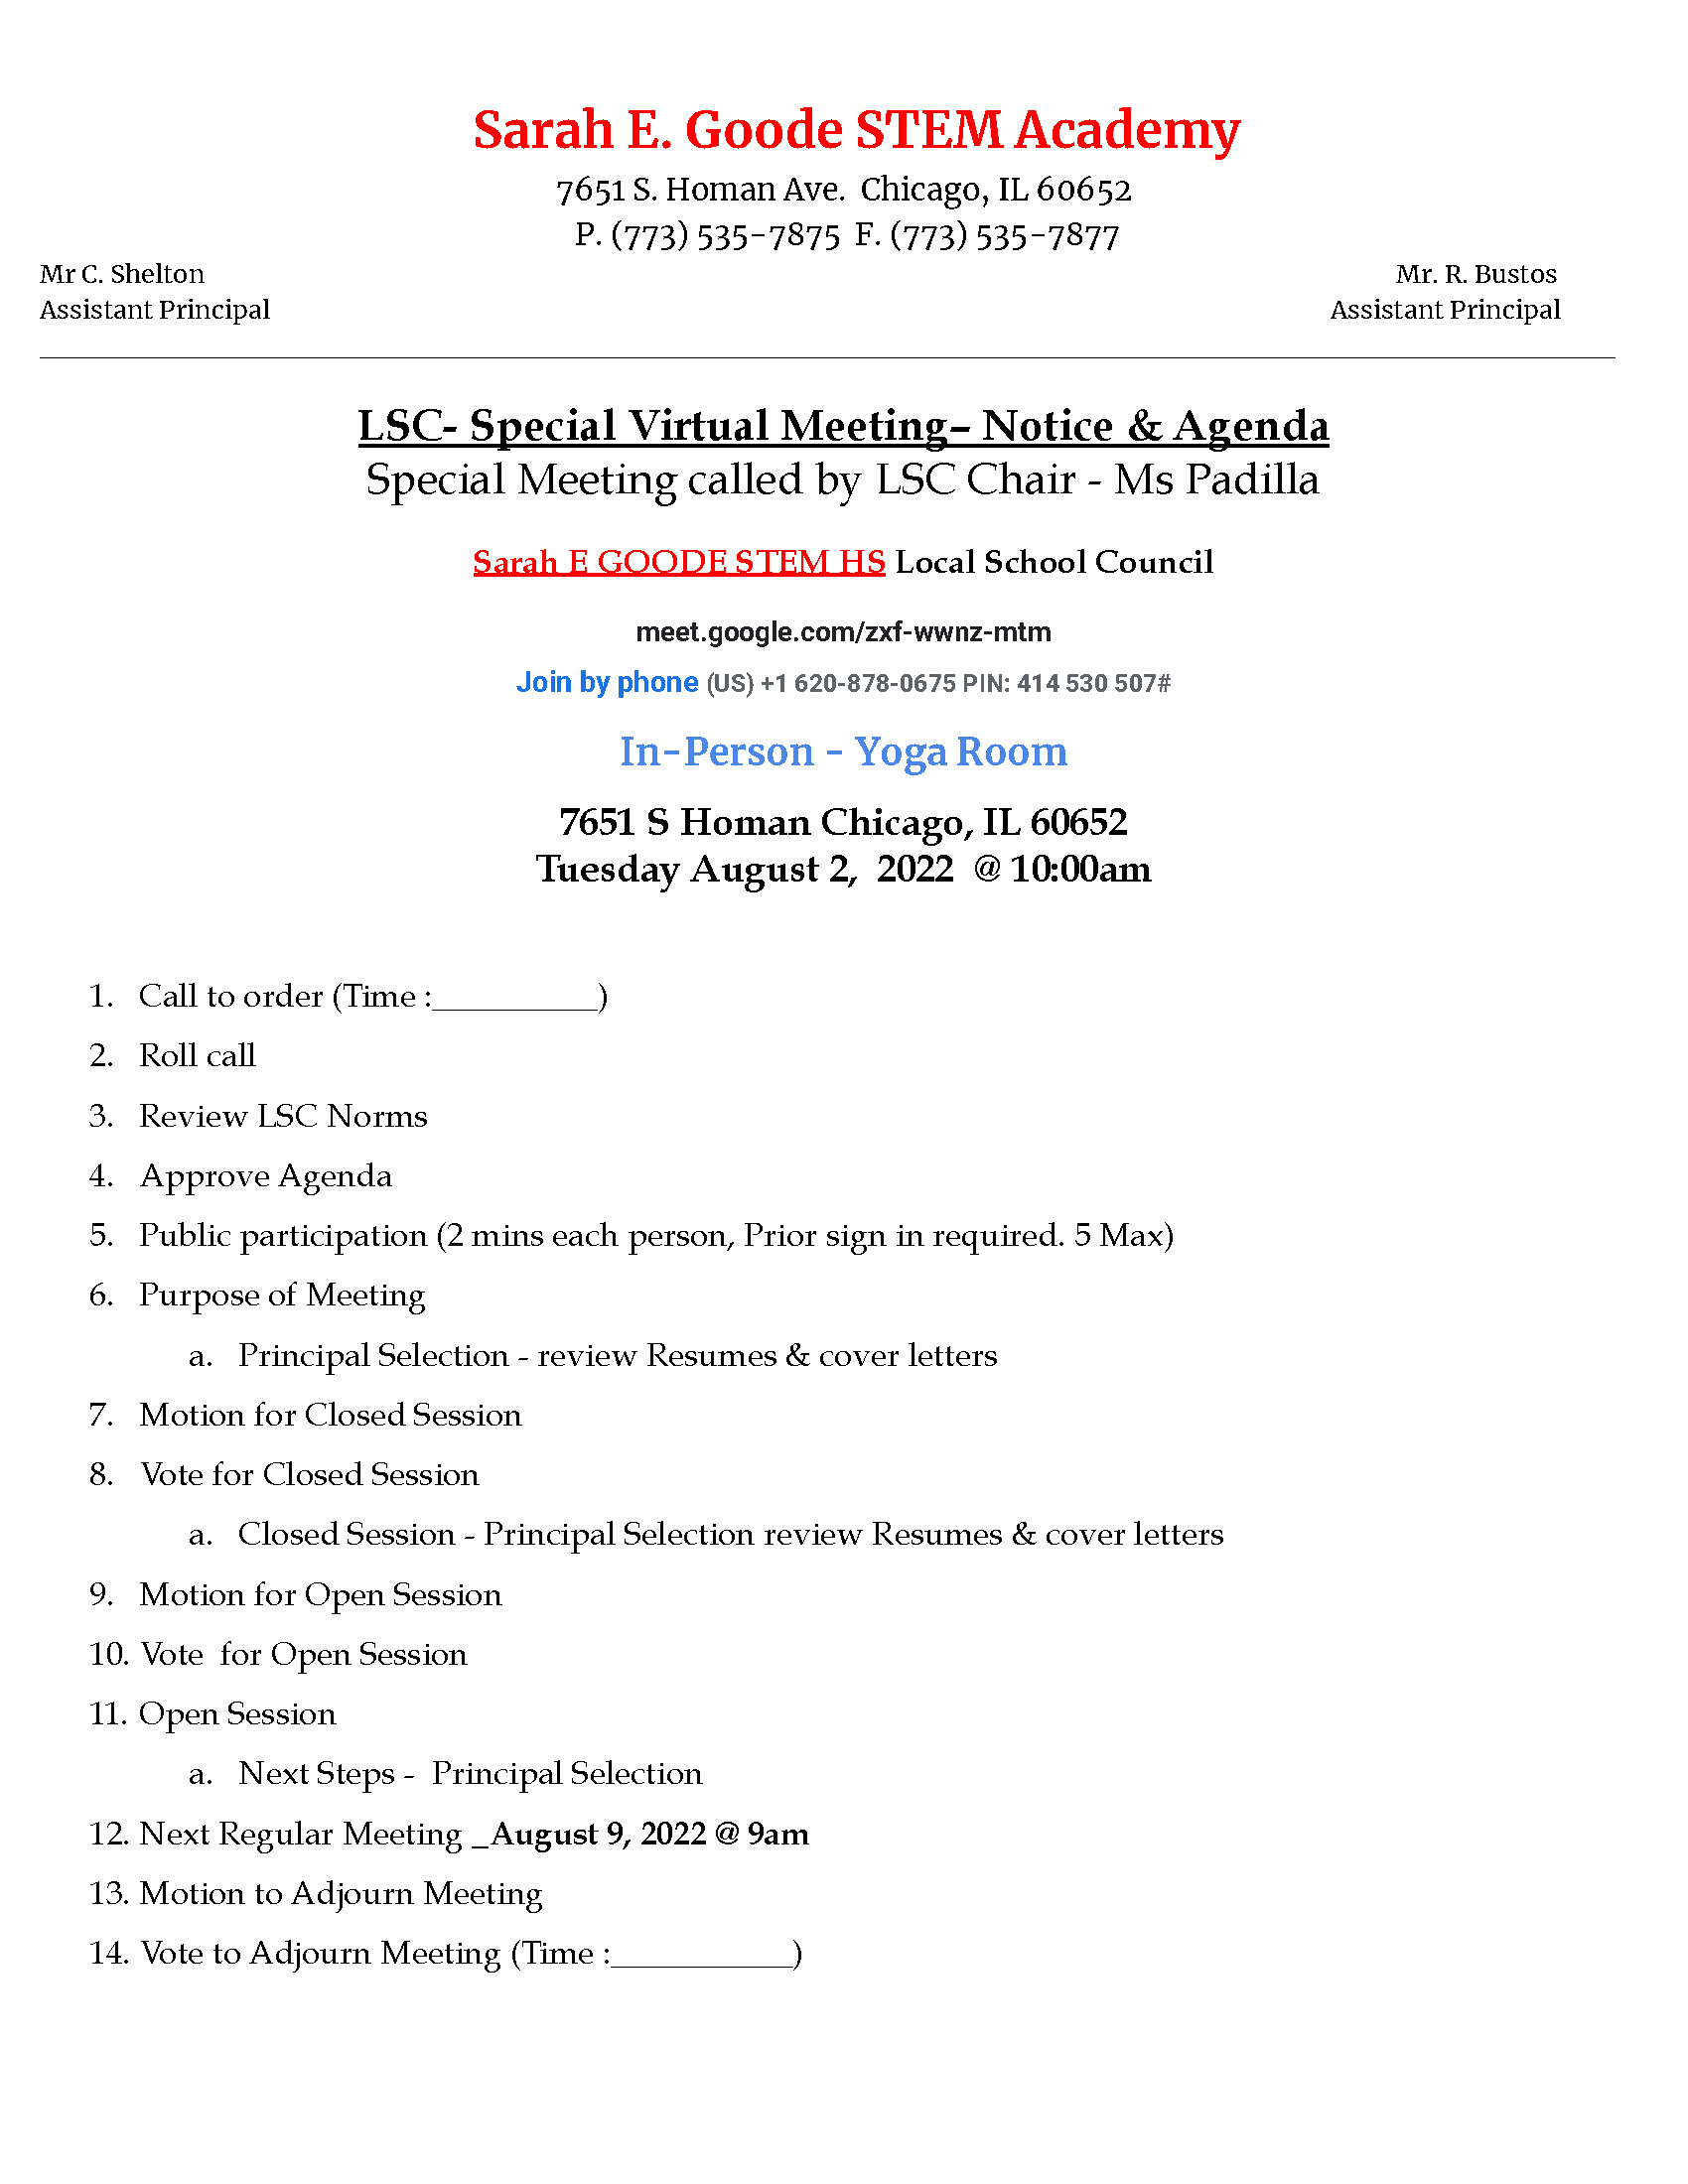 LSC Special Virtual Meeting